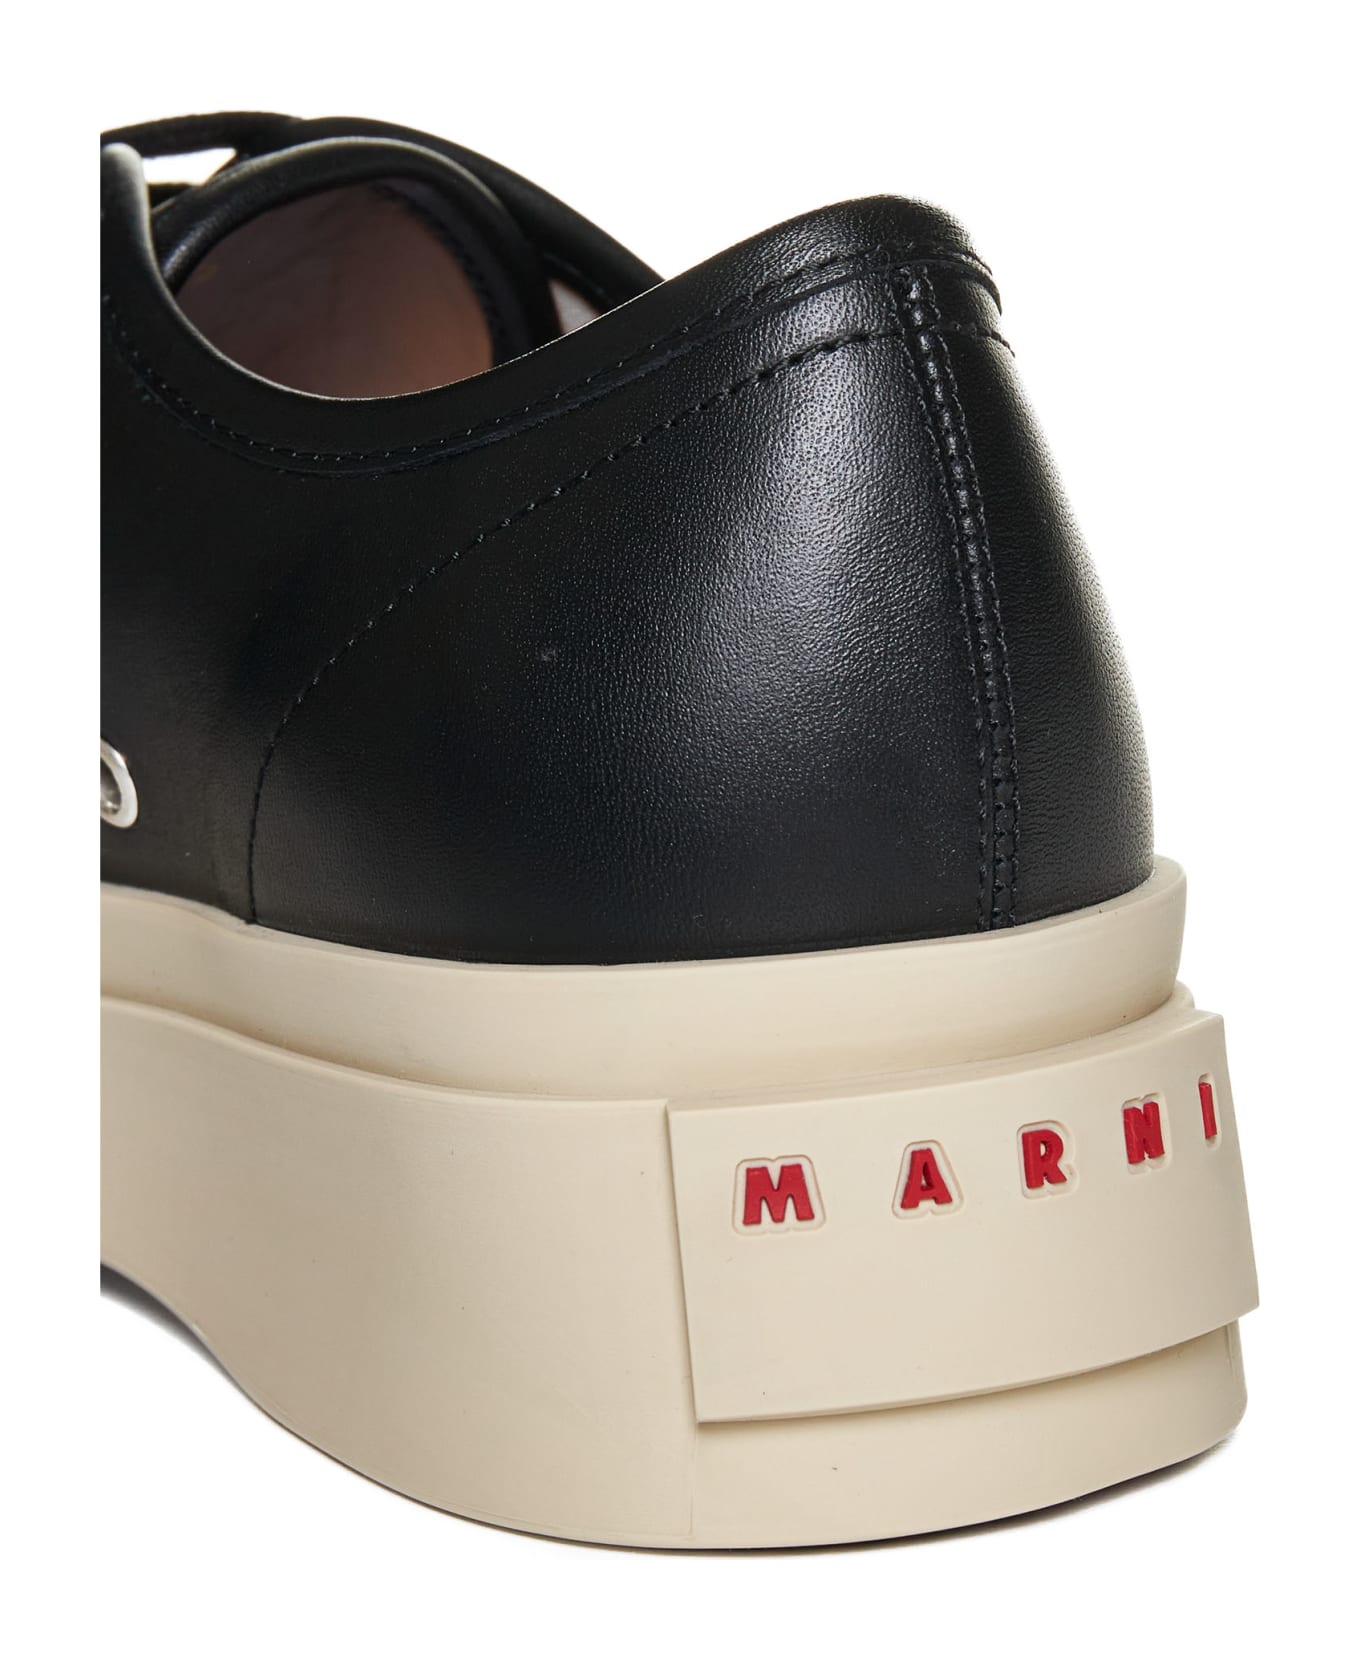 Marni Sneakers - Black